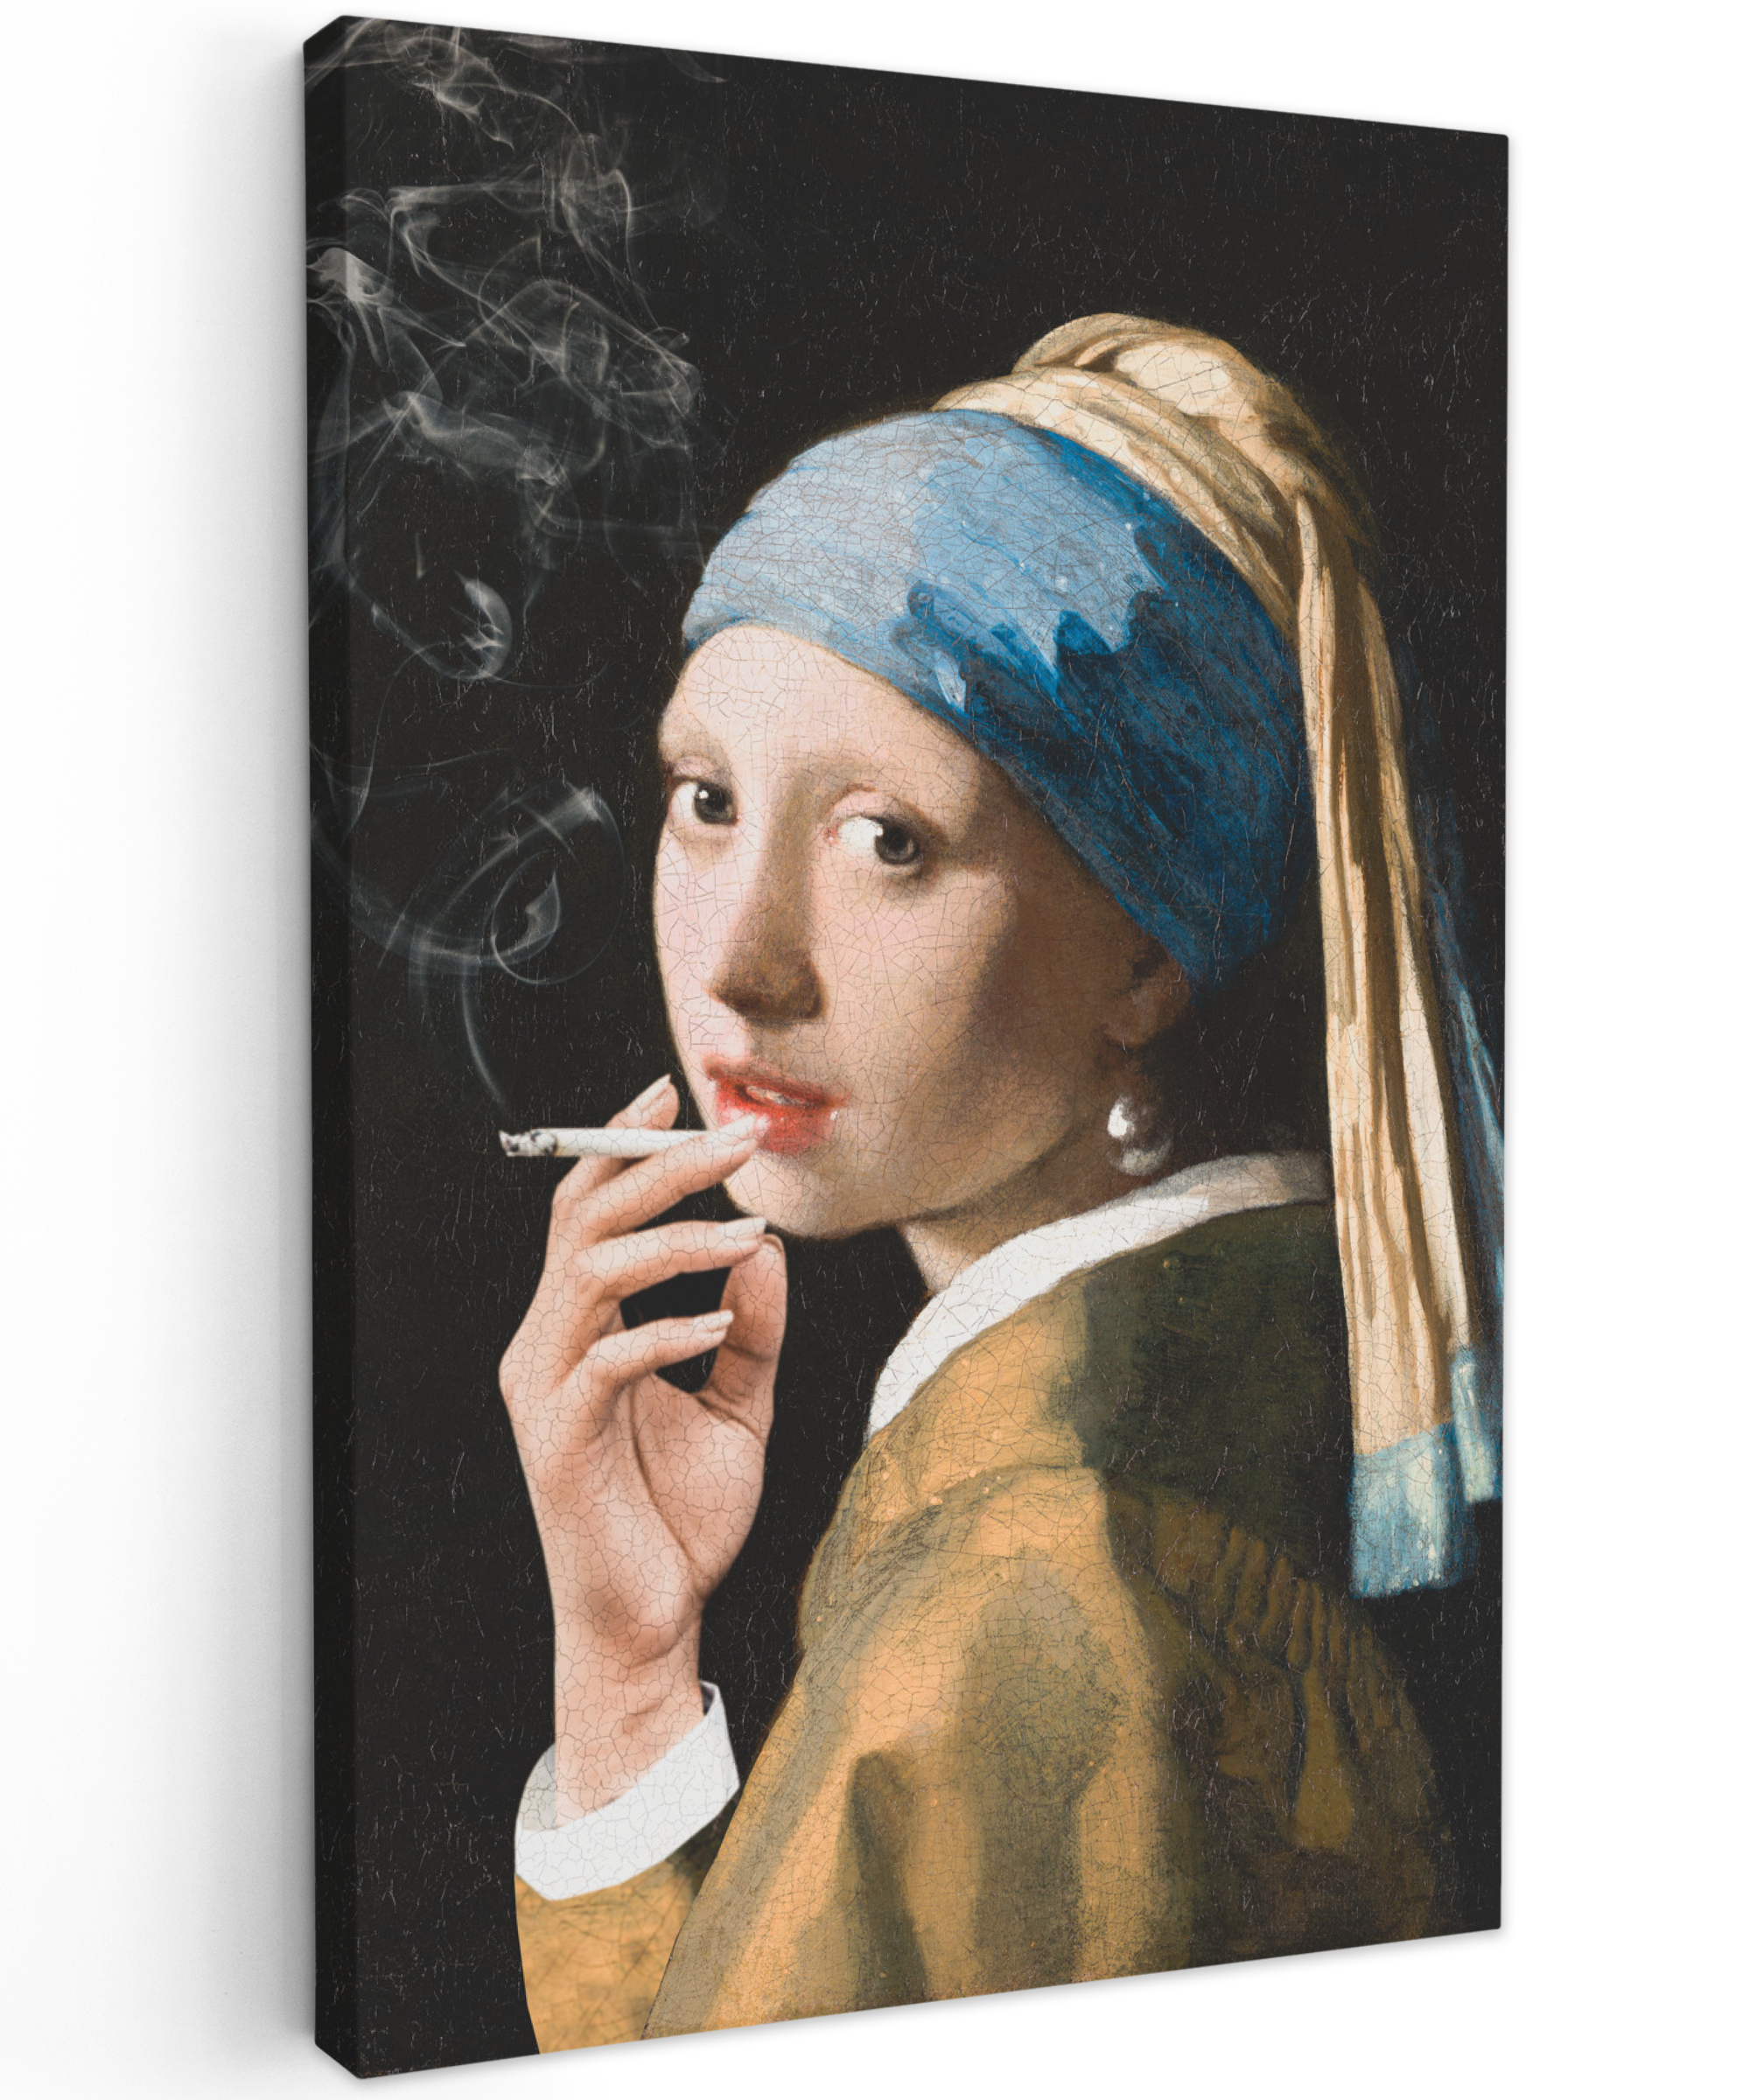 Leinwandbild - Mädchen mit Perlenohrring - Johannes Vermeer - Zigaretten